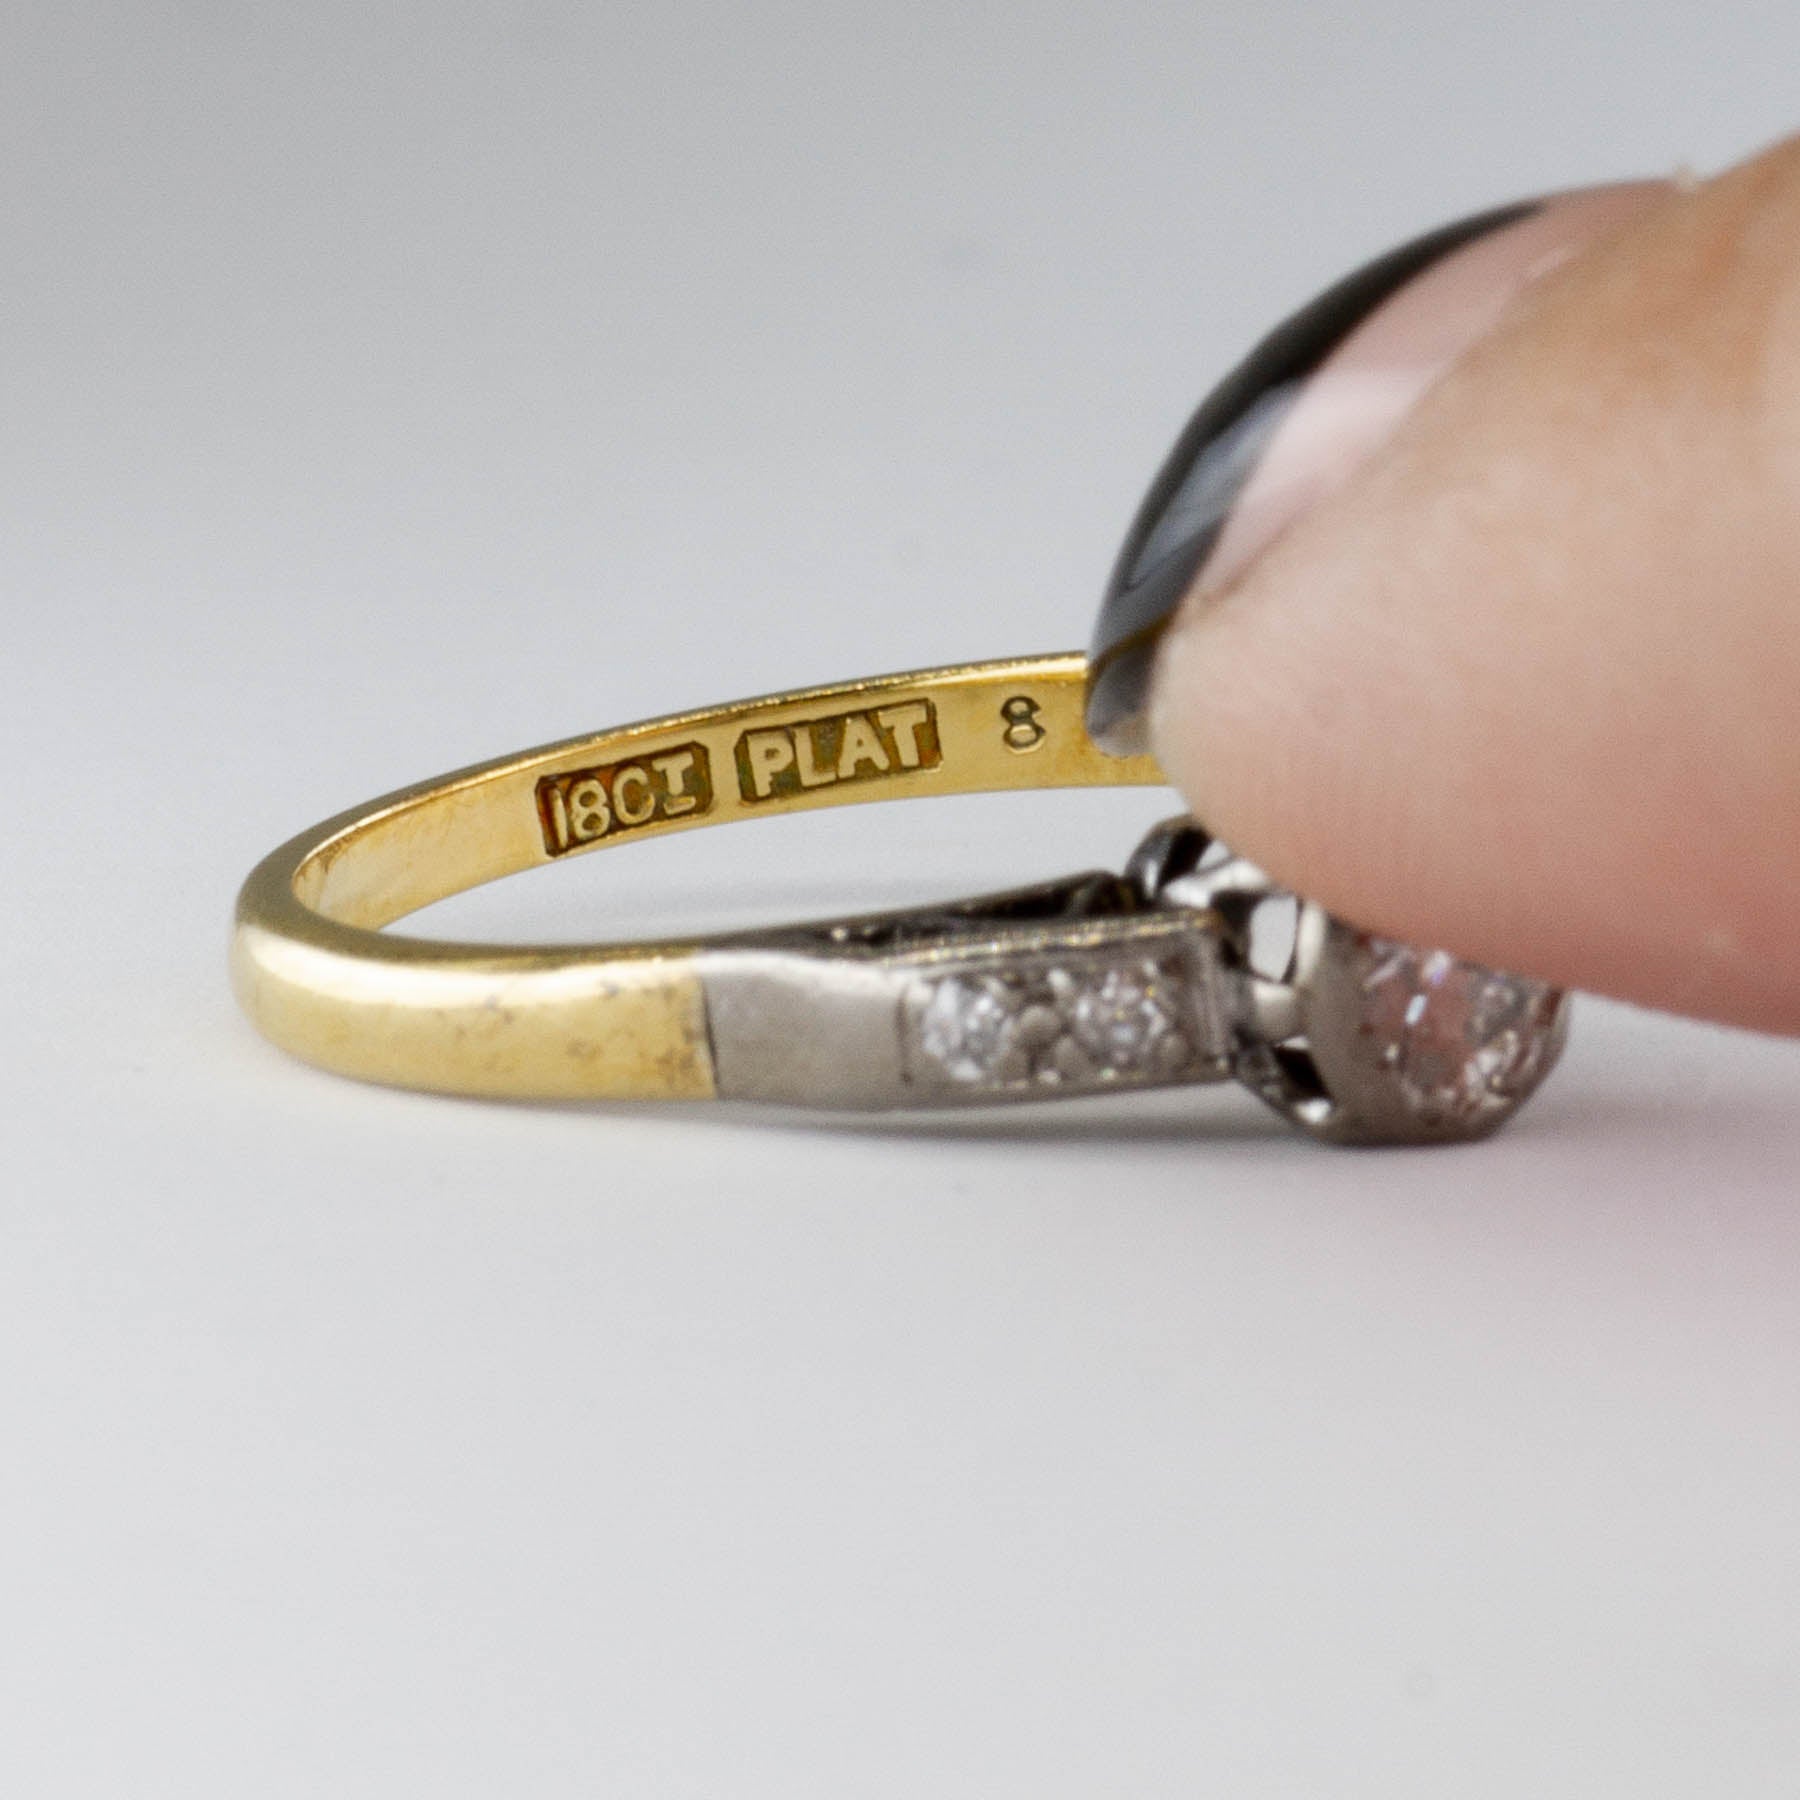 Art Deco 18k and Platinum Diamond Ring | 0.24ctw  | SZ 5.75 |